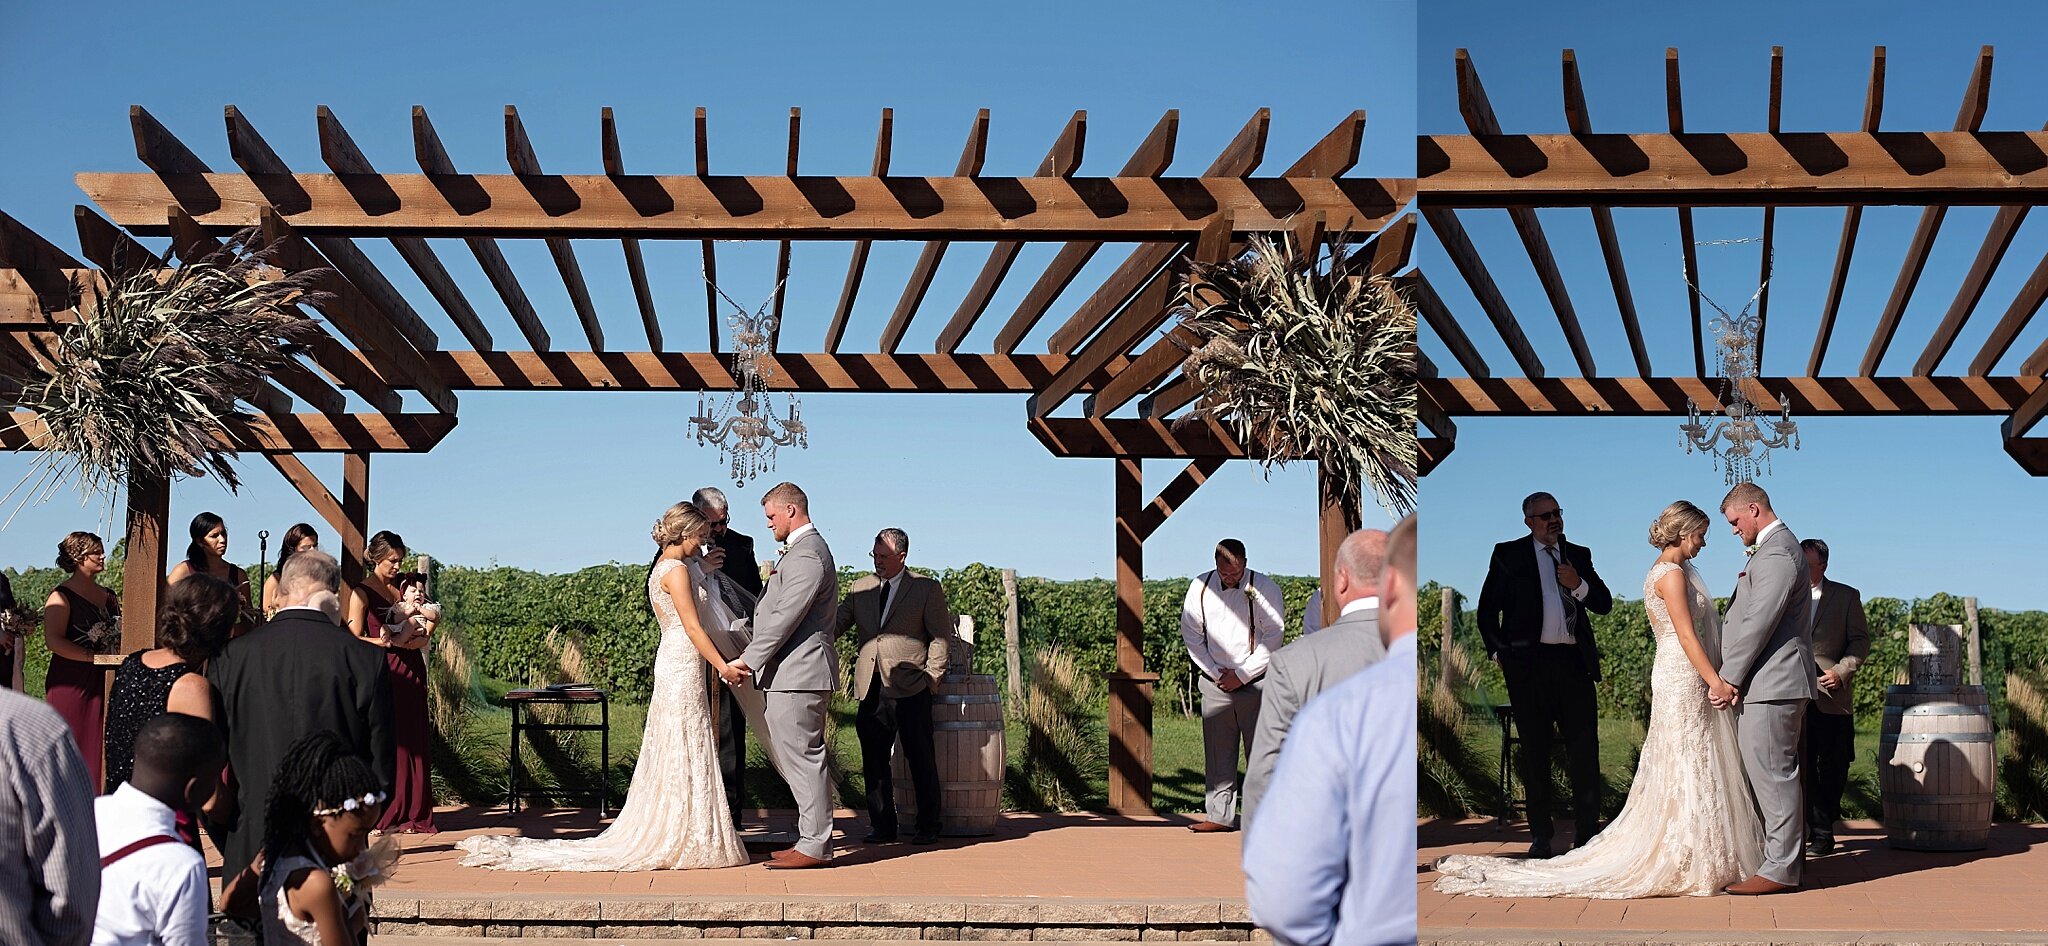 calico skies winery wedding